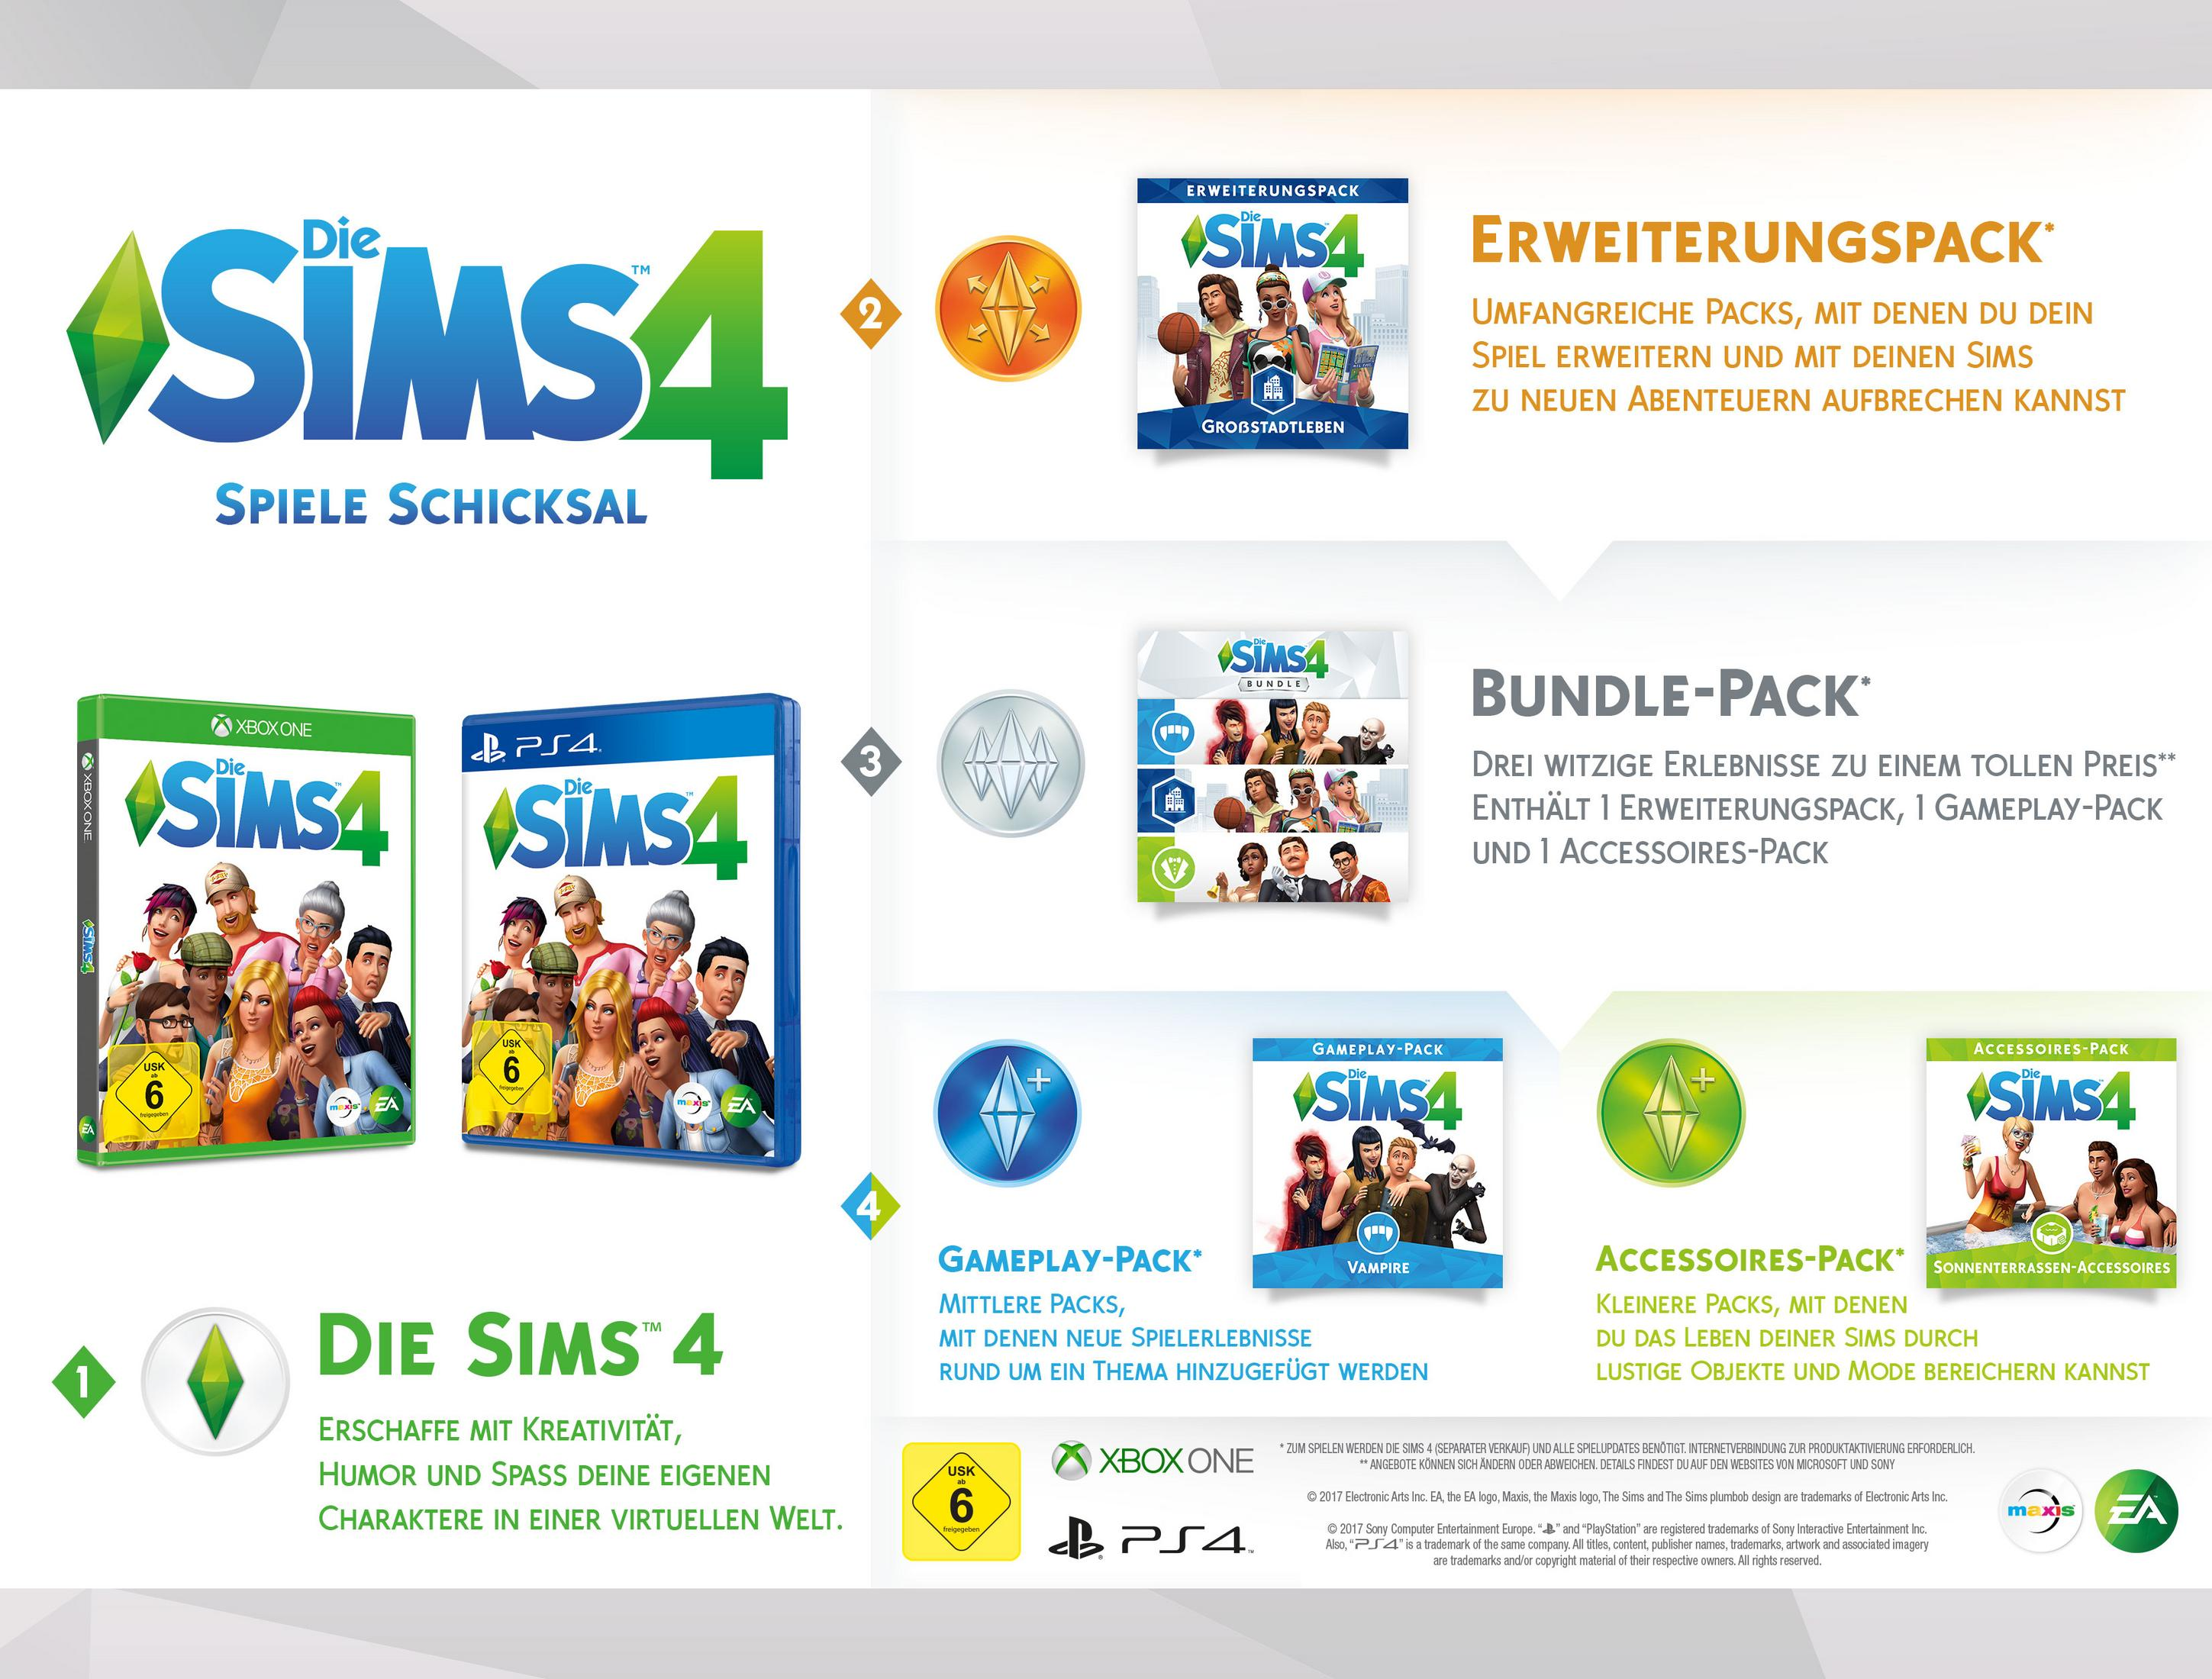 Die Sims 4 One] - [Xbox